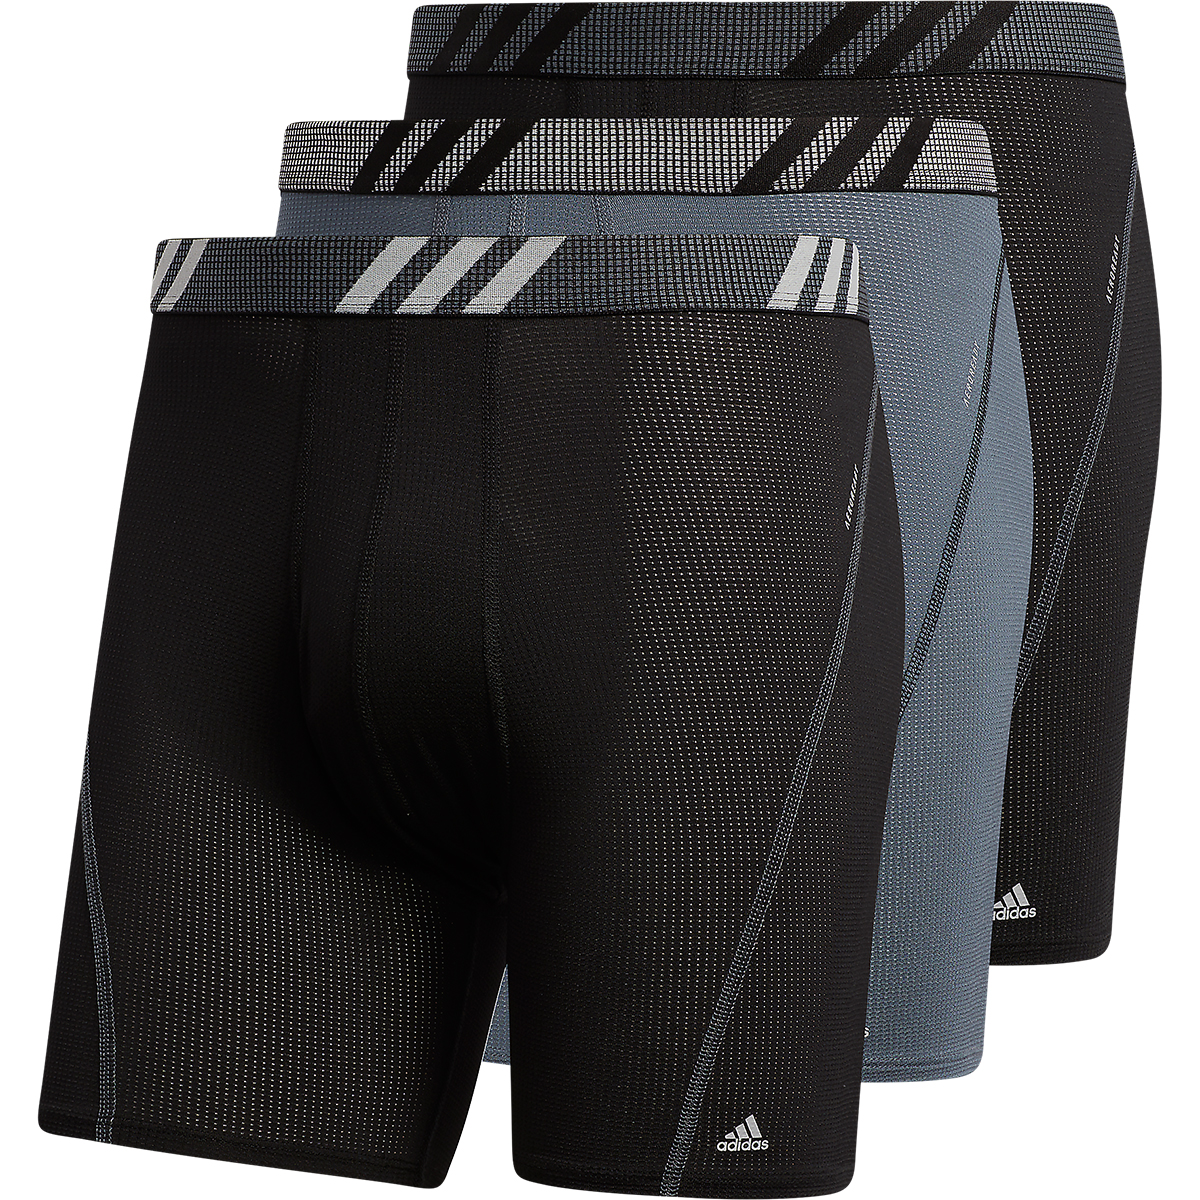 Adidas Men’s Sport Performance Mesh Boxer Briefs, 3 Pack